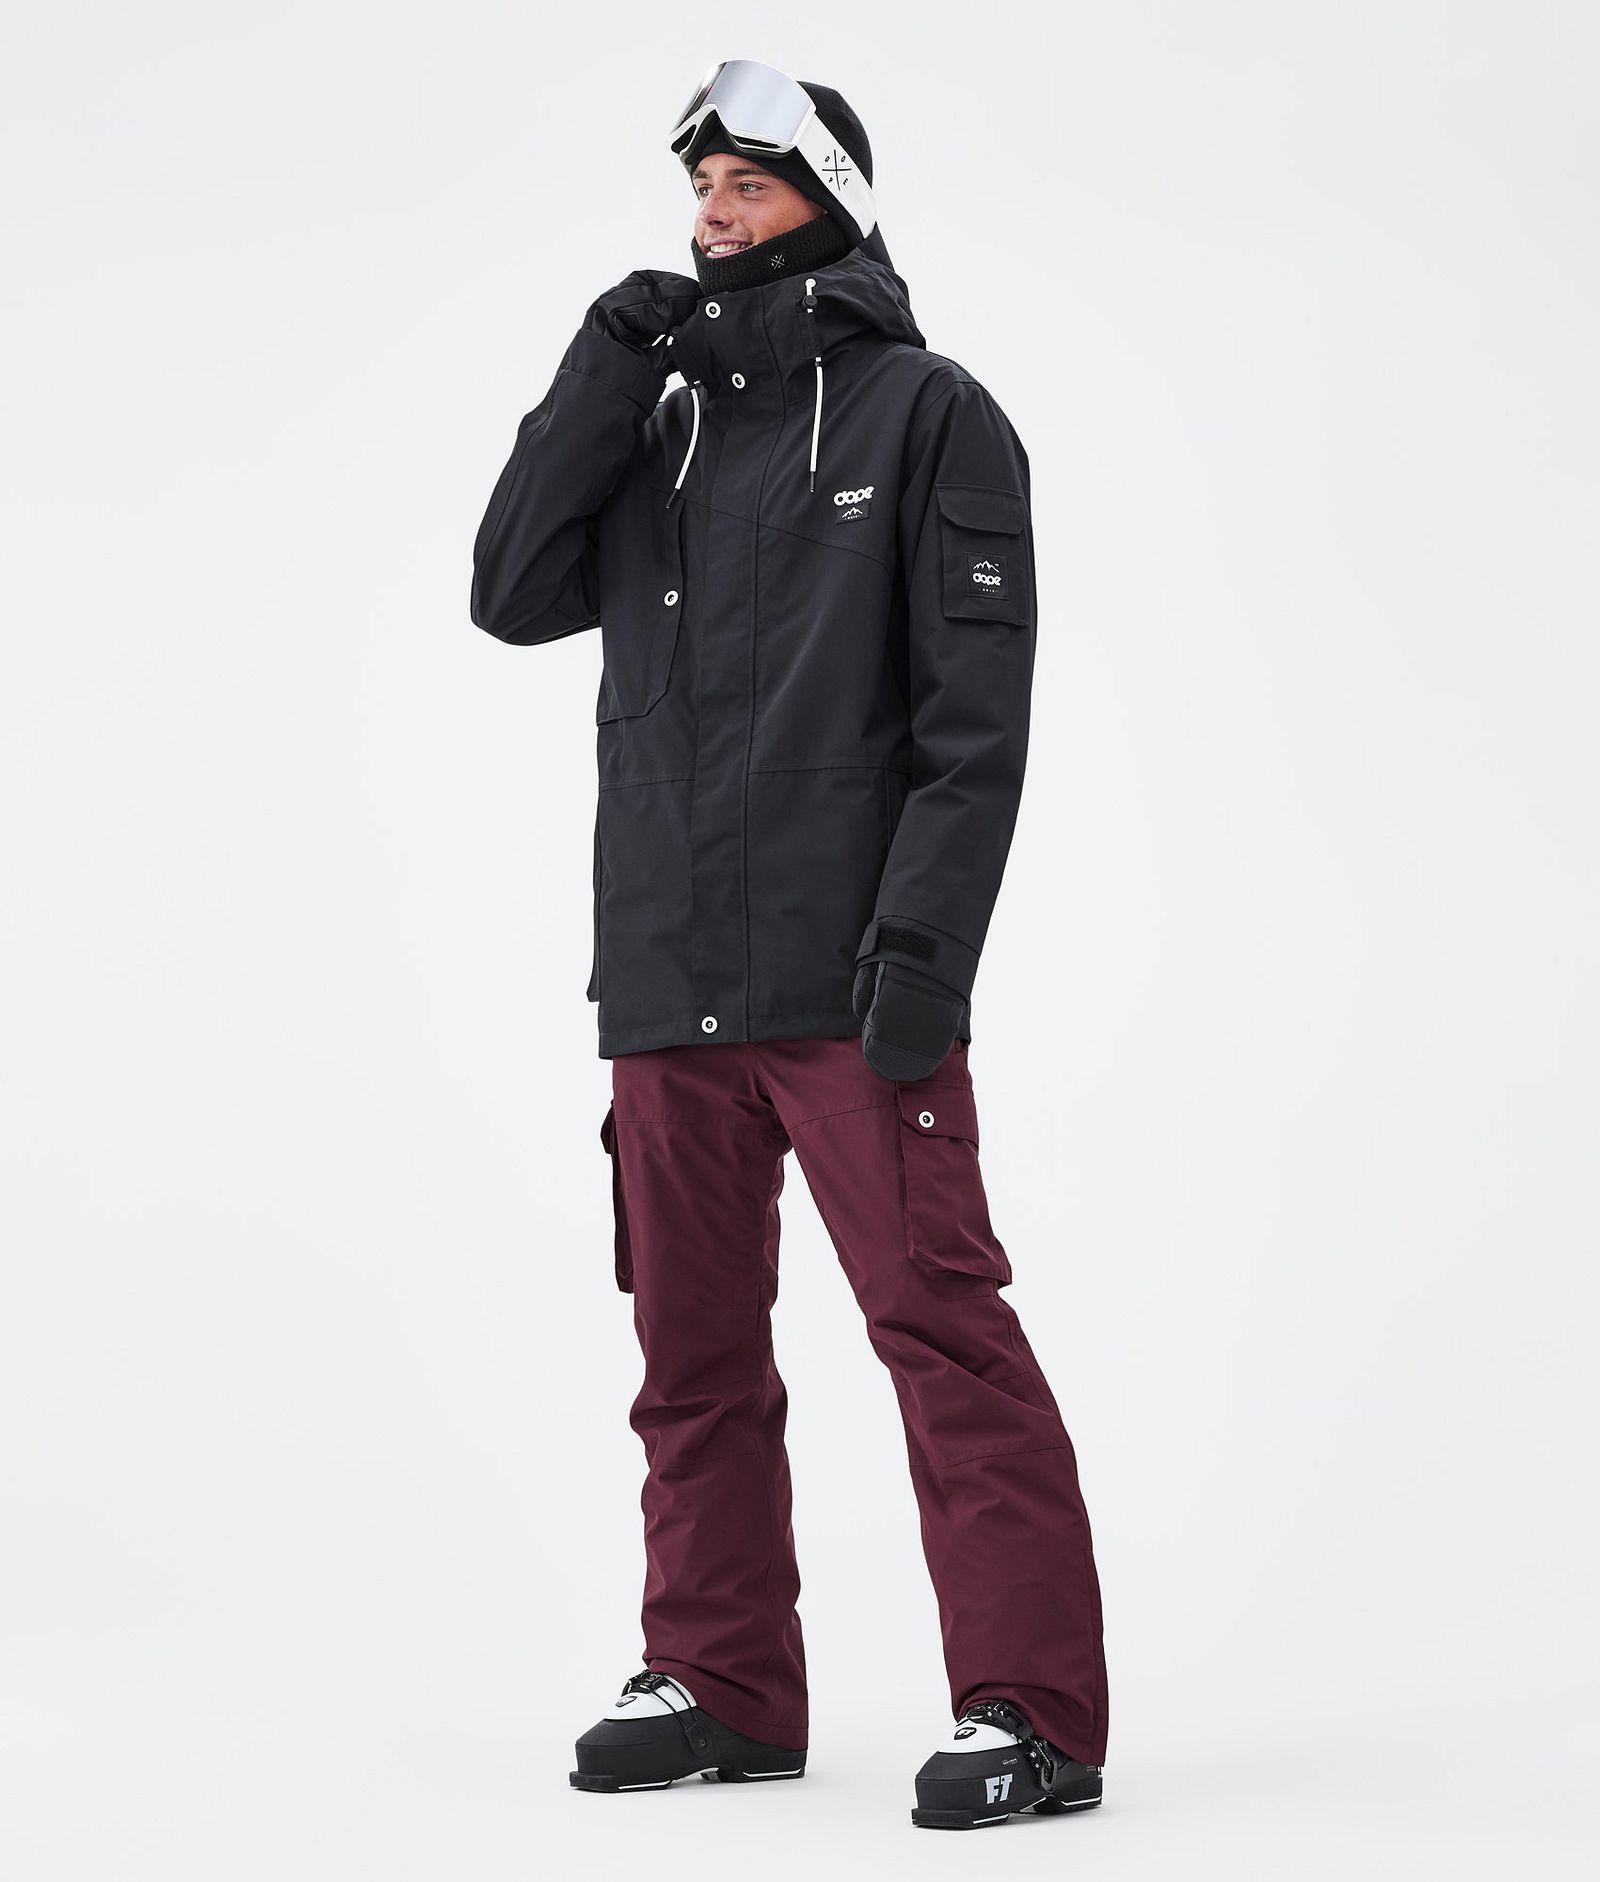 Iconic Pantalon de Ski Homme Burgundy